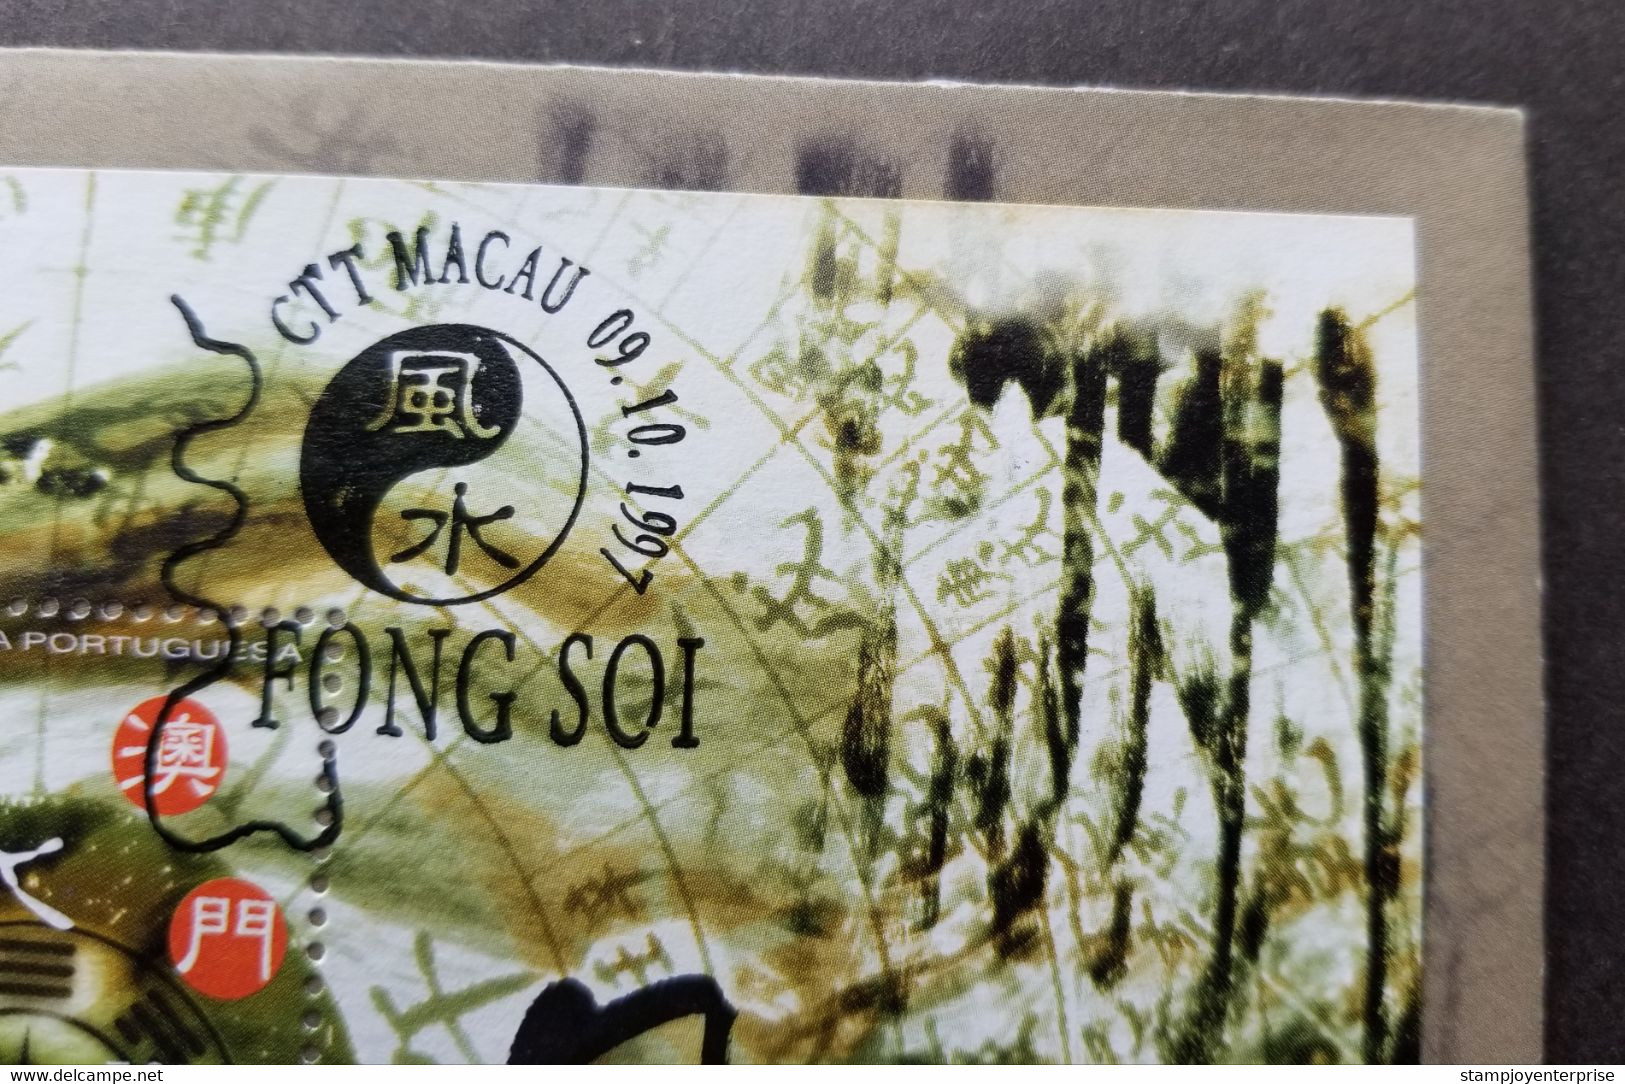 Macau Macao China Fong Soi 1997 Five Elements Ying Yang (miniature FDC) *see Scan - Storia Postale